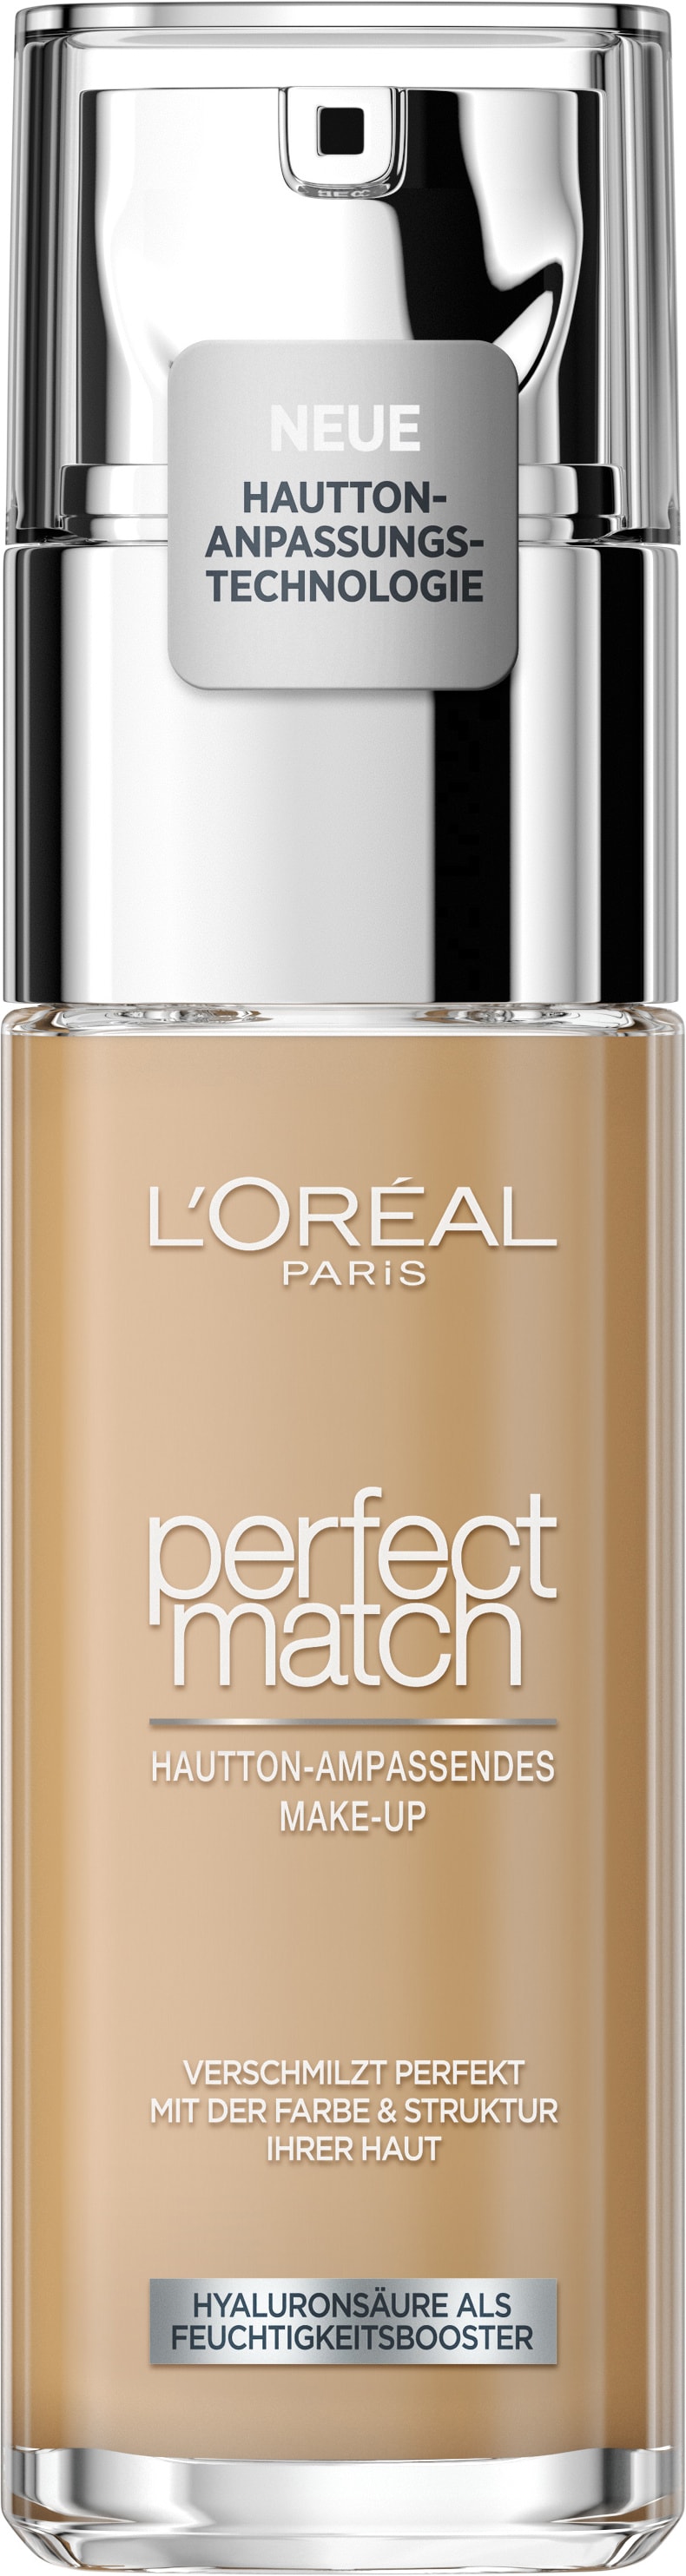 L'Oréal Paris Perfect Match Make-Up (4.5.N True Beige) Galaxus